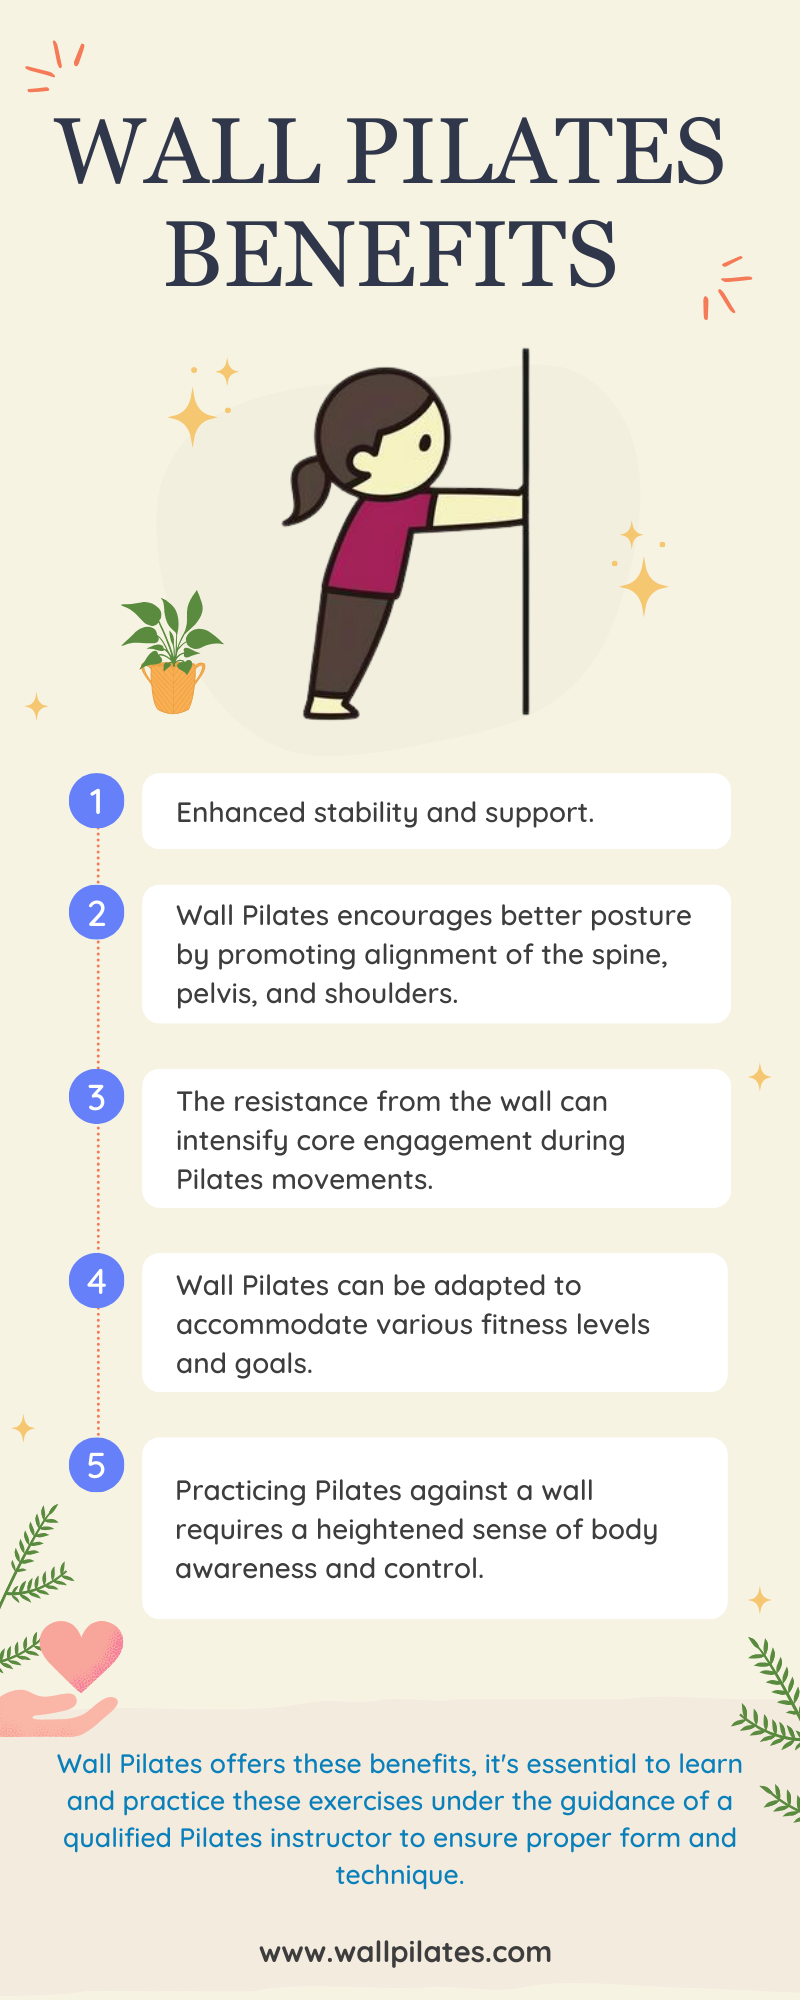 Wall Pilates Workouts: Wall Roll-Down - Wall Pilates - Medium